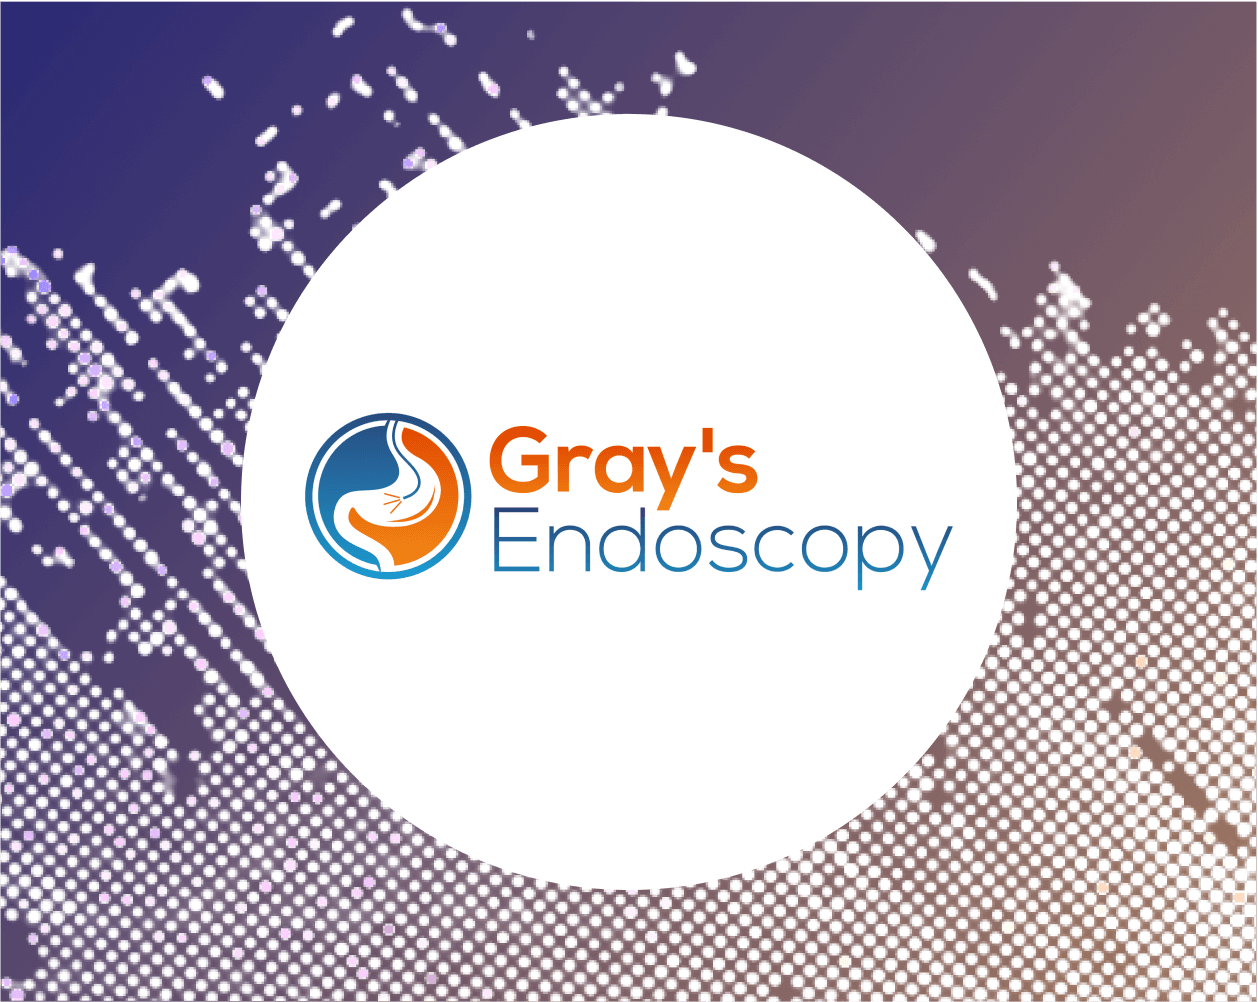 Gray’s Endoscopy